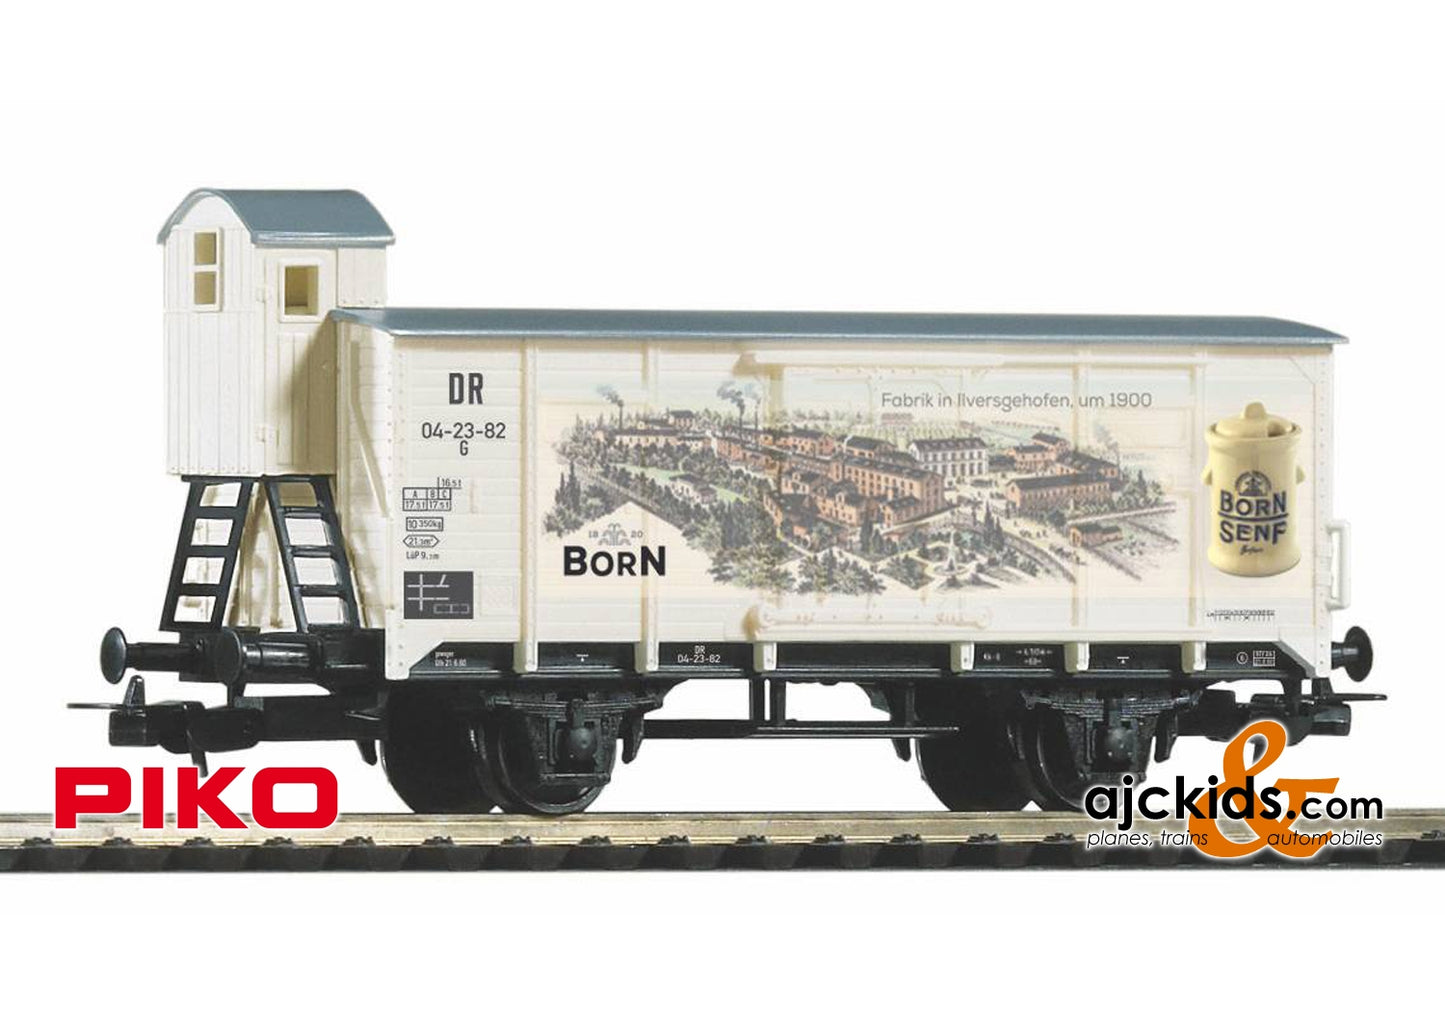 Piko 54447 - Covered Freight Car G02 DR Born Senf m. Bhs. Era III